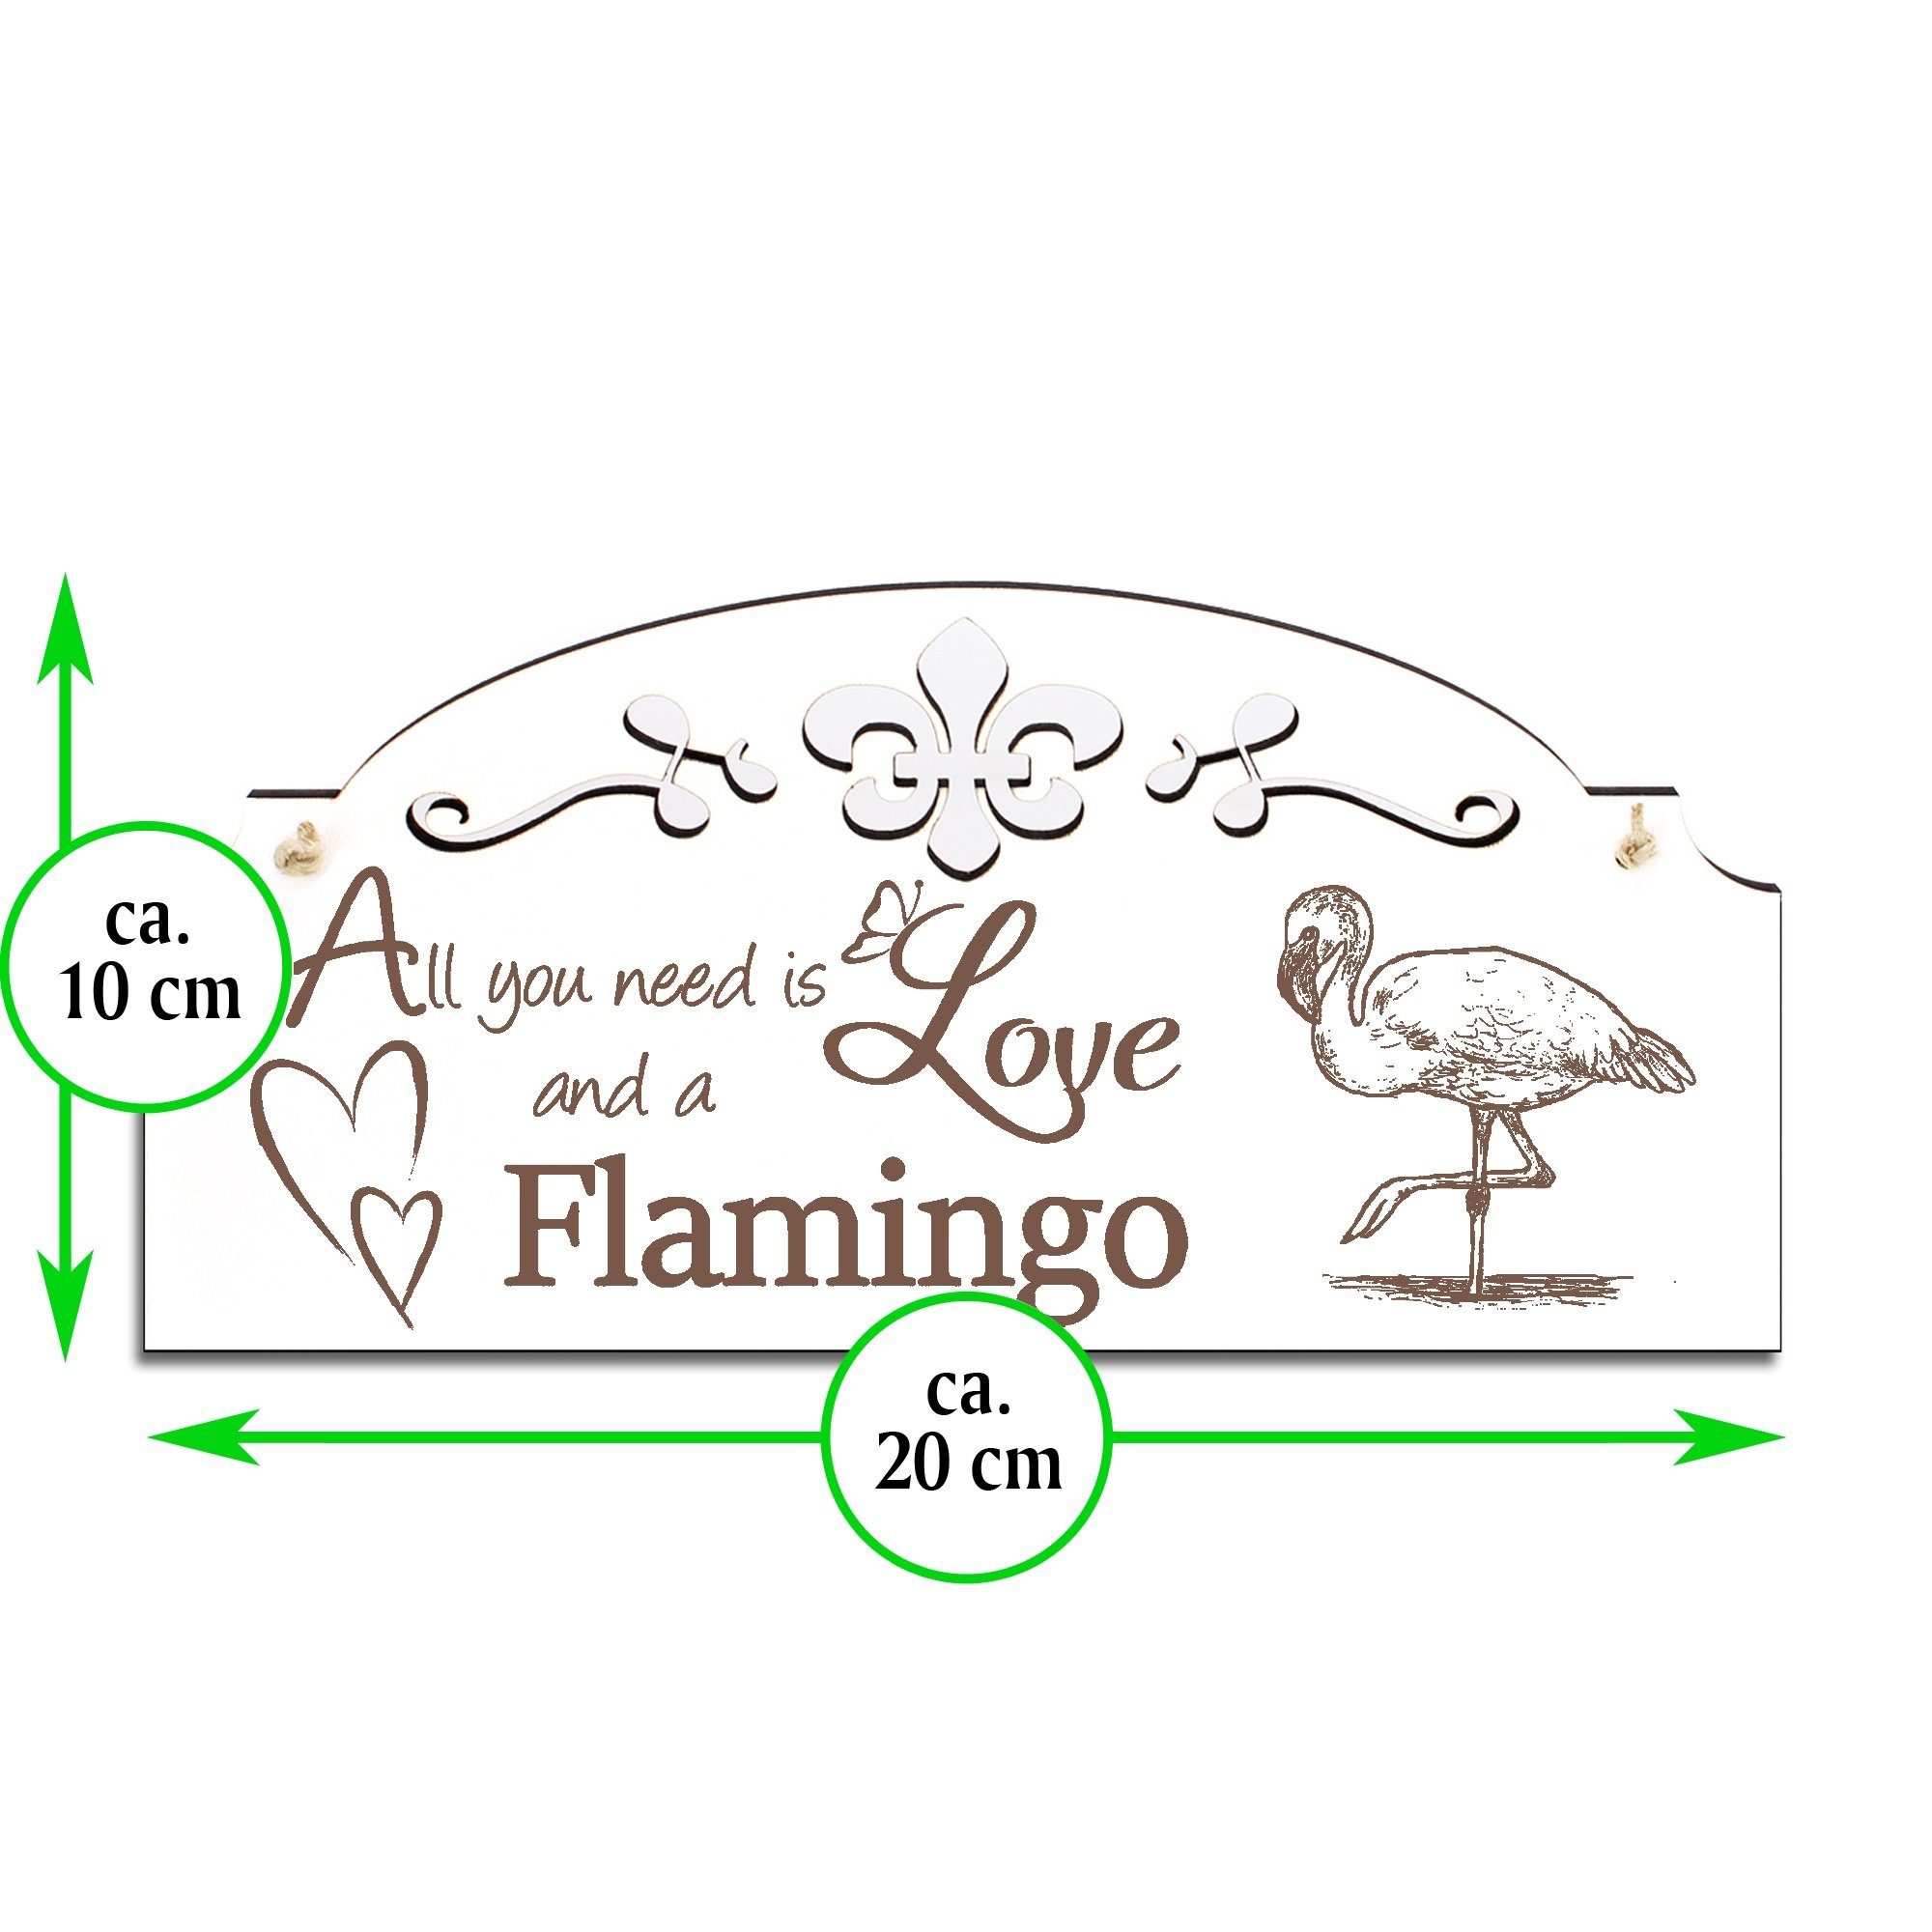 Deko Love need you Hängedekoration Dekolando All Flamingo 20x10cm is